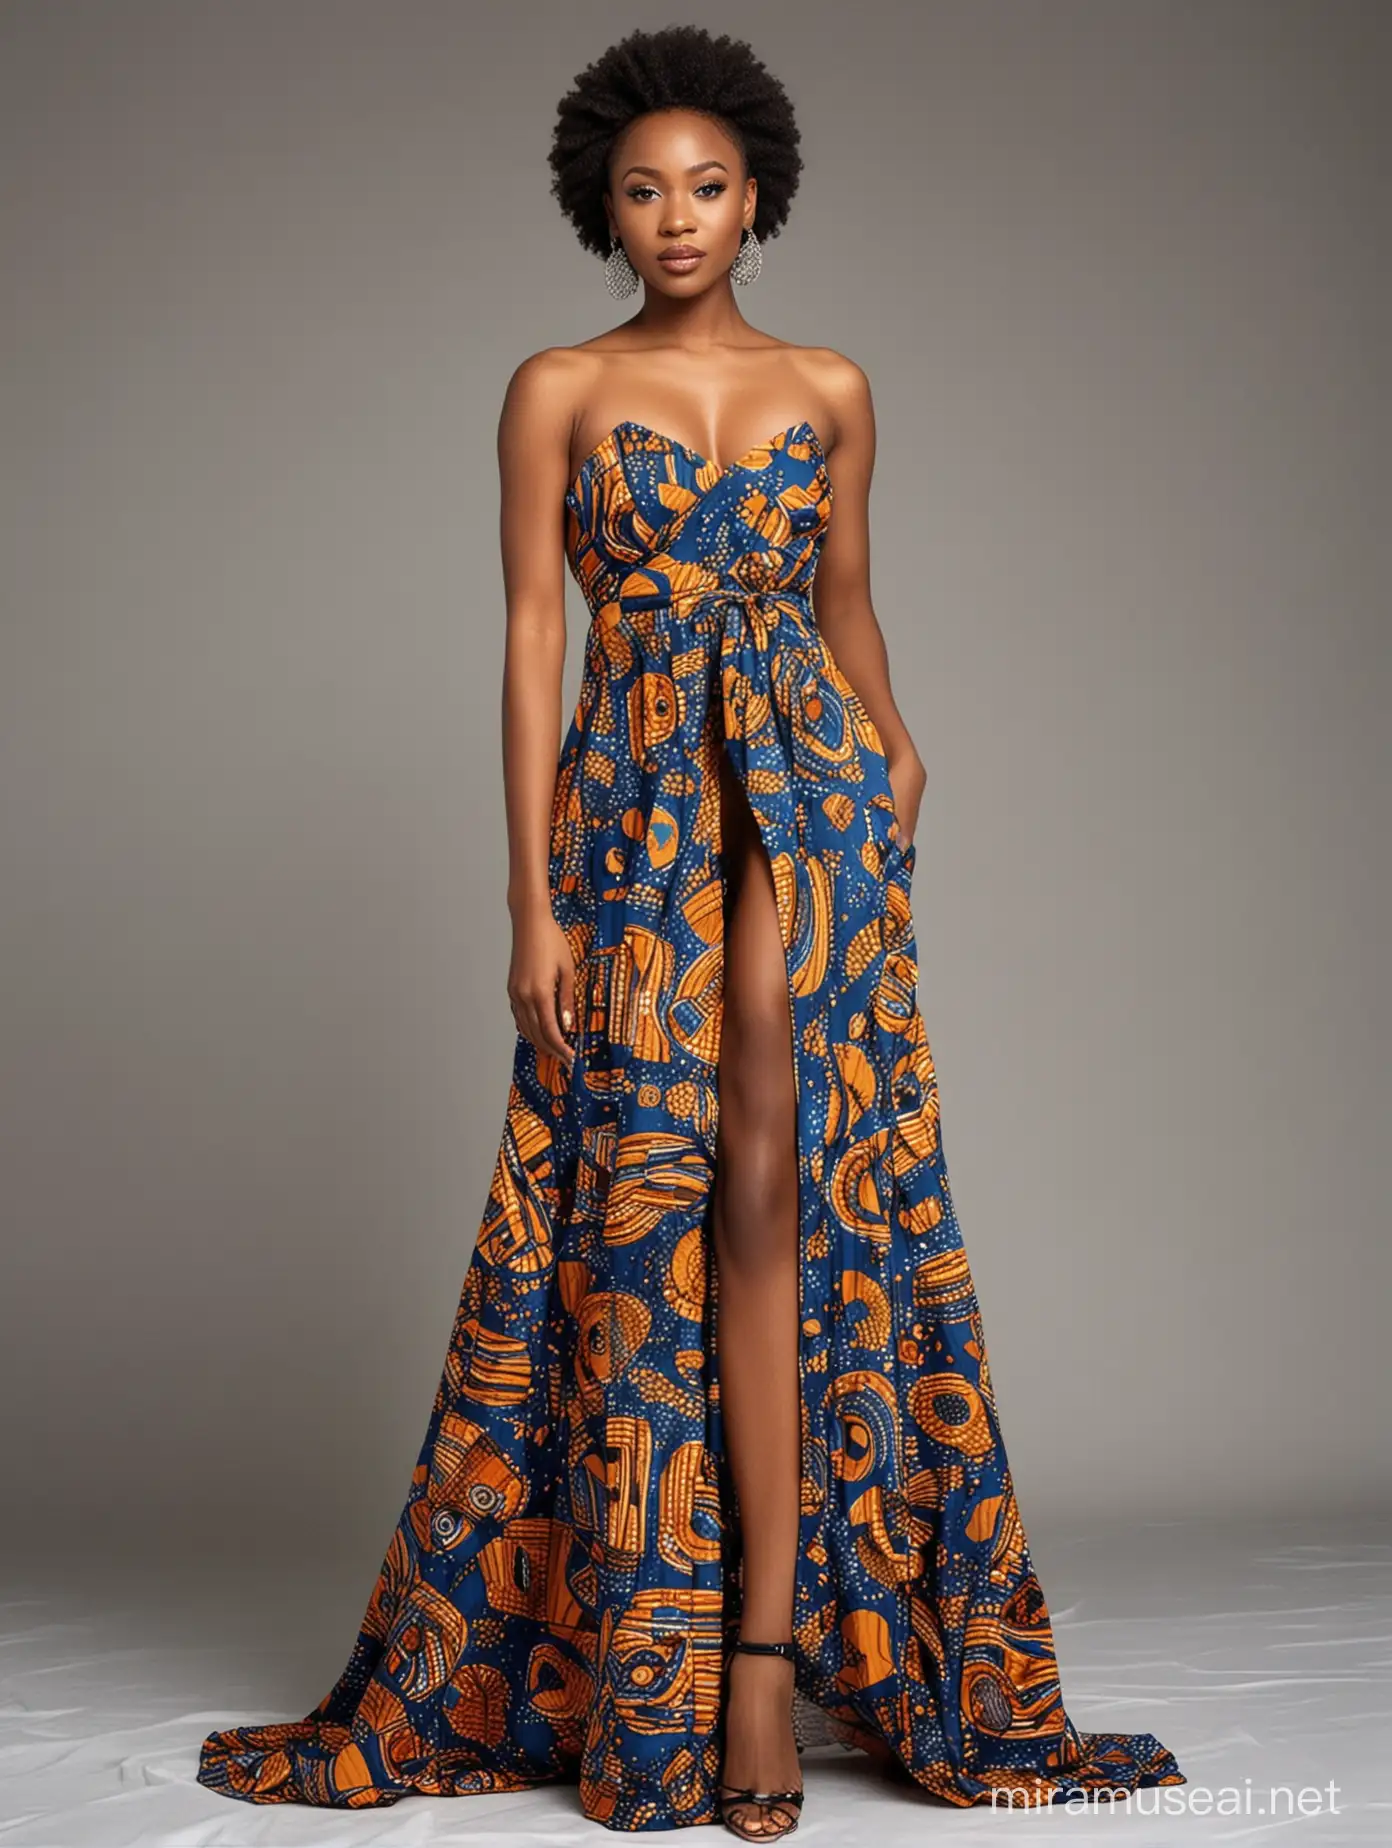 African Fashion Model in Elegant Traditional Attire